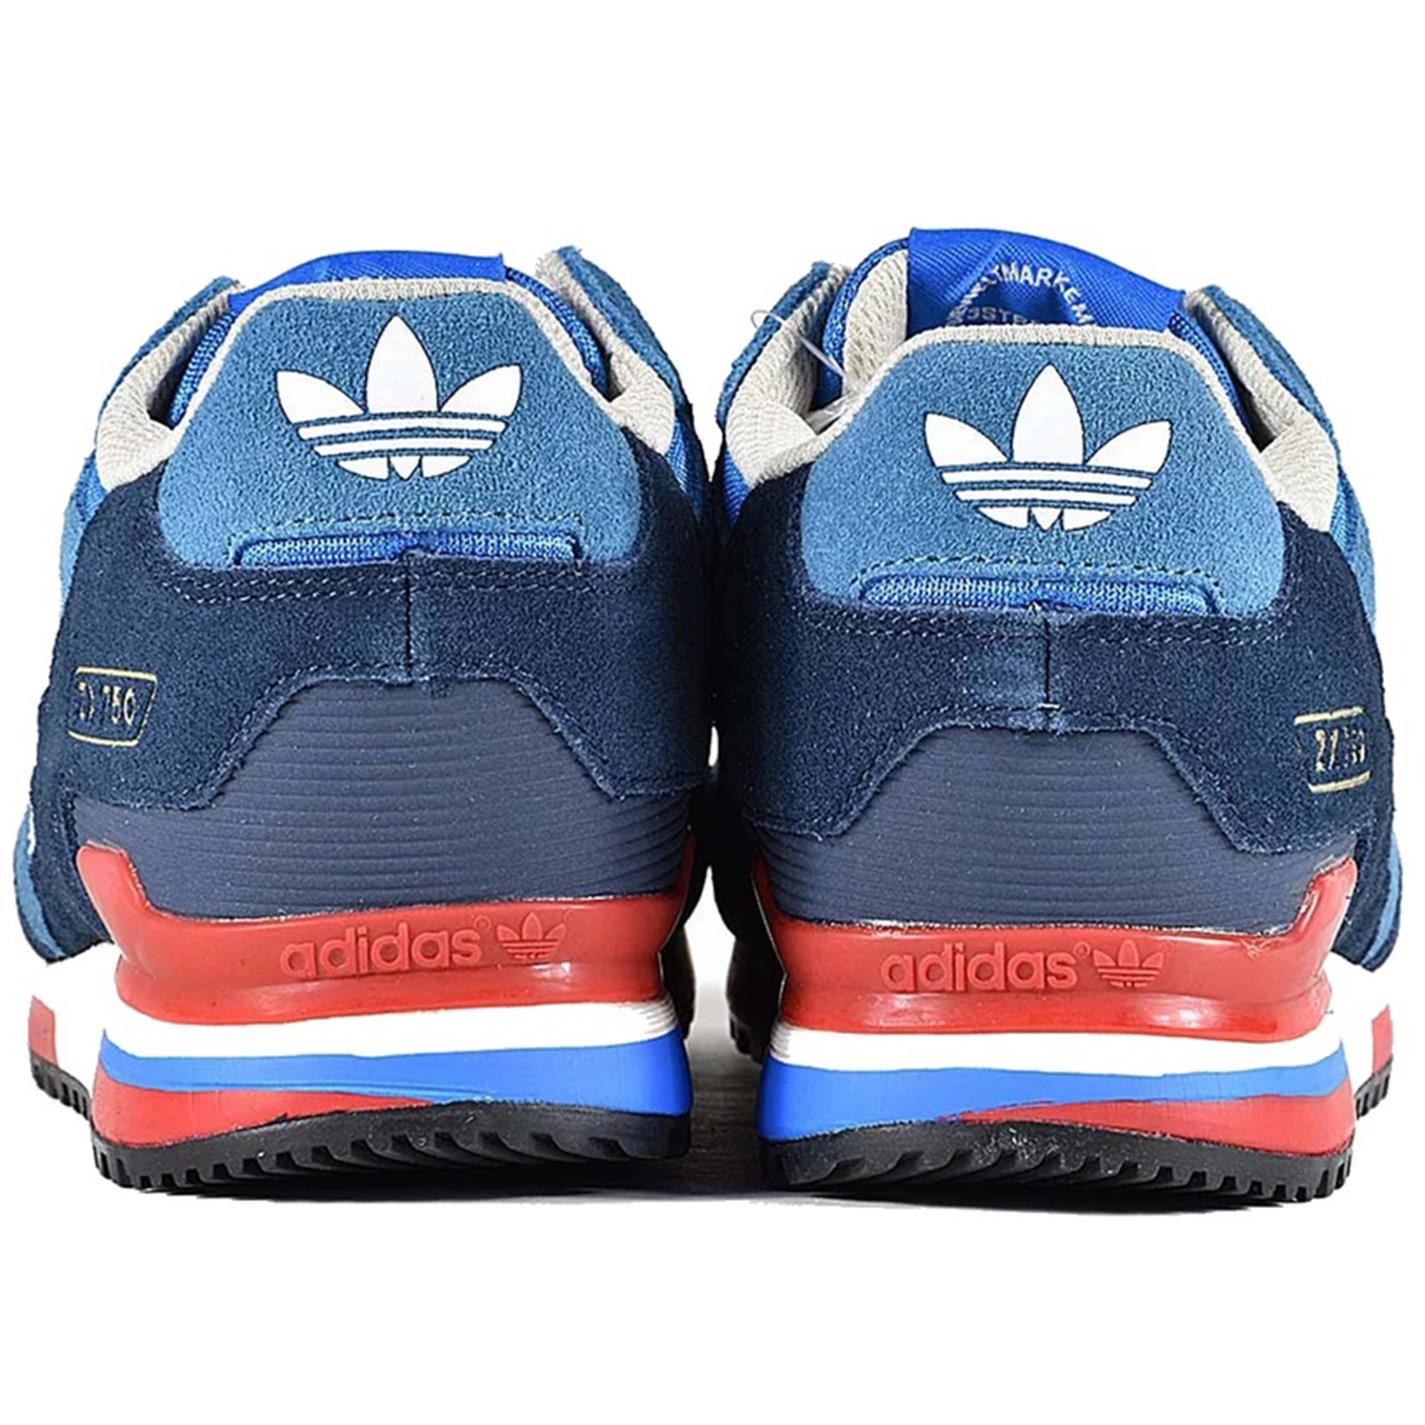 adidas Originals ZX 750 Mens Athleisure Trainers Blue Navy